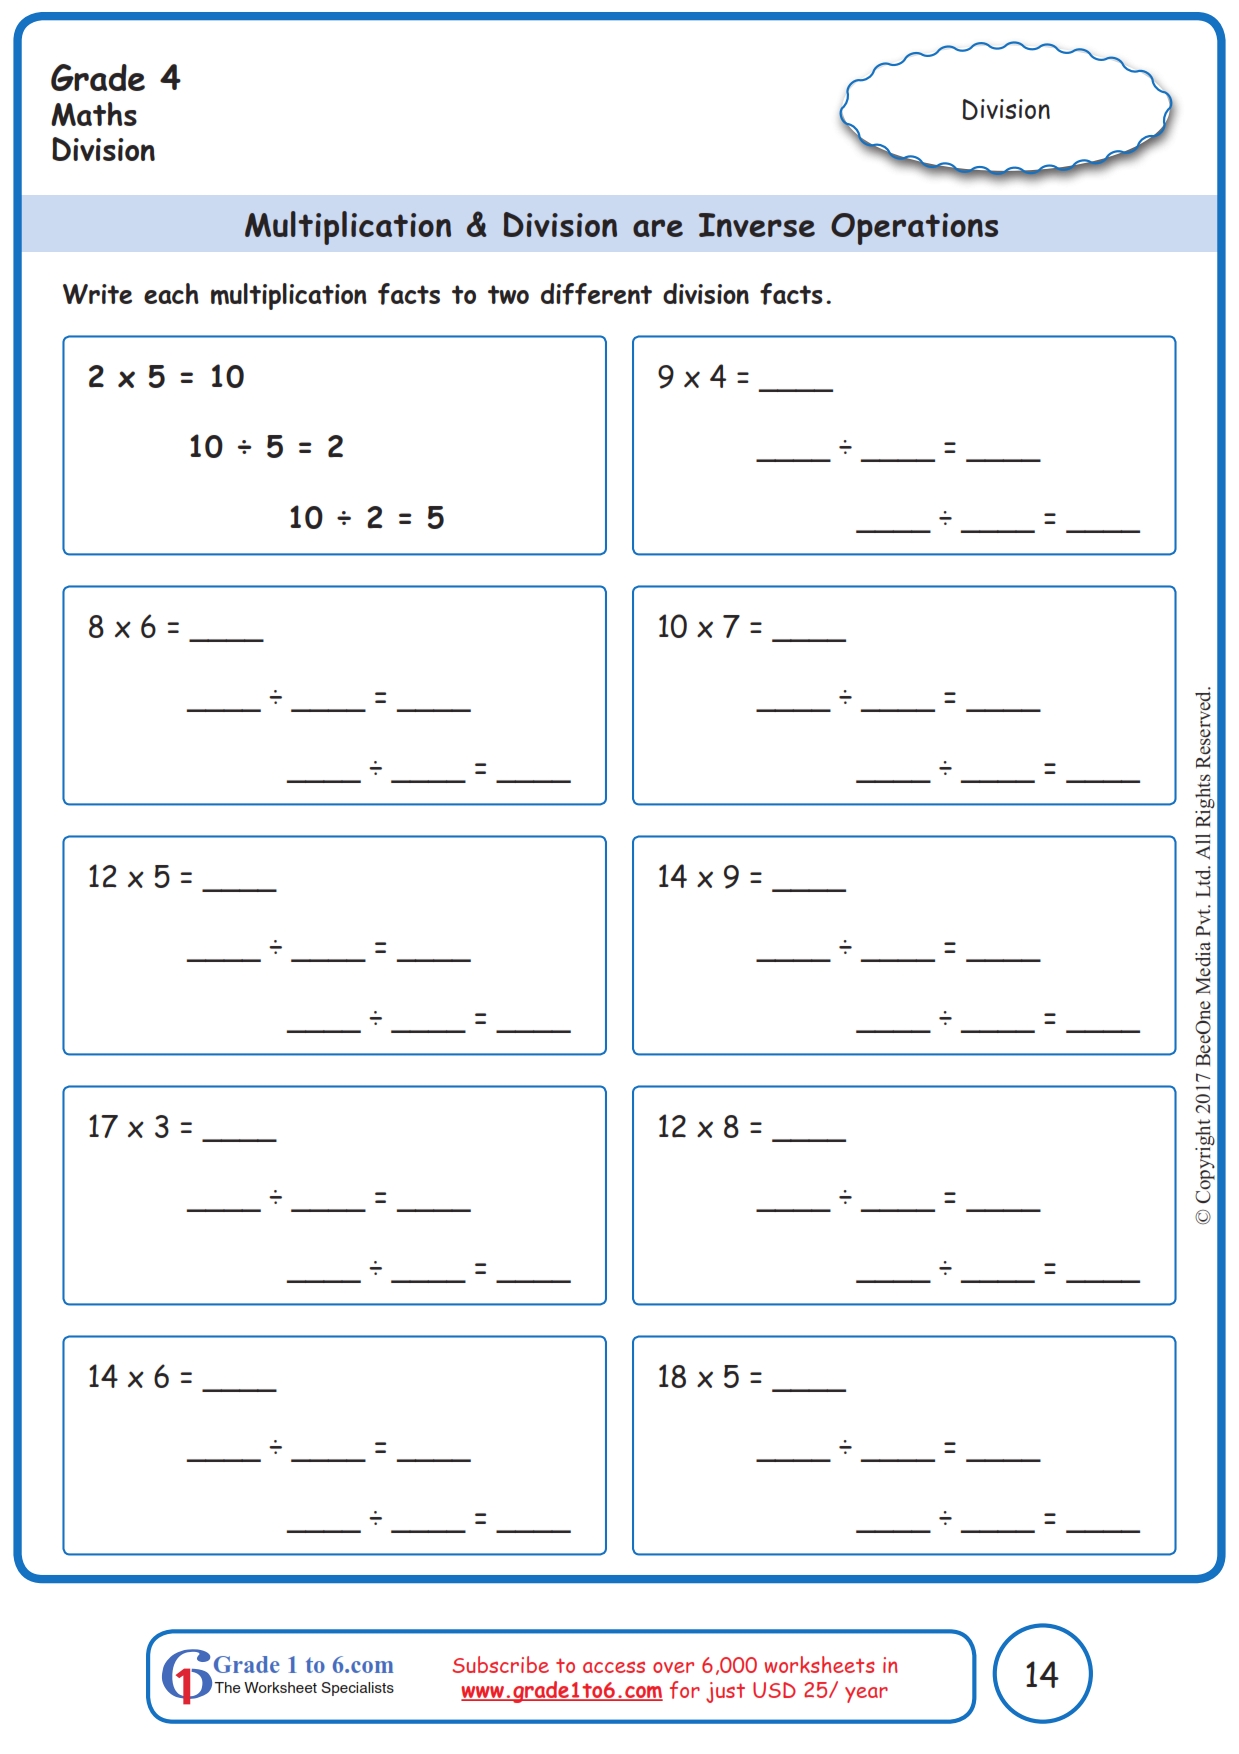 Multiplication And Division Inverse Worksheets Ks1